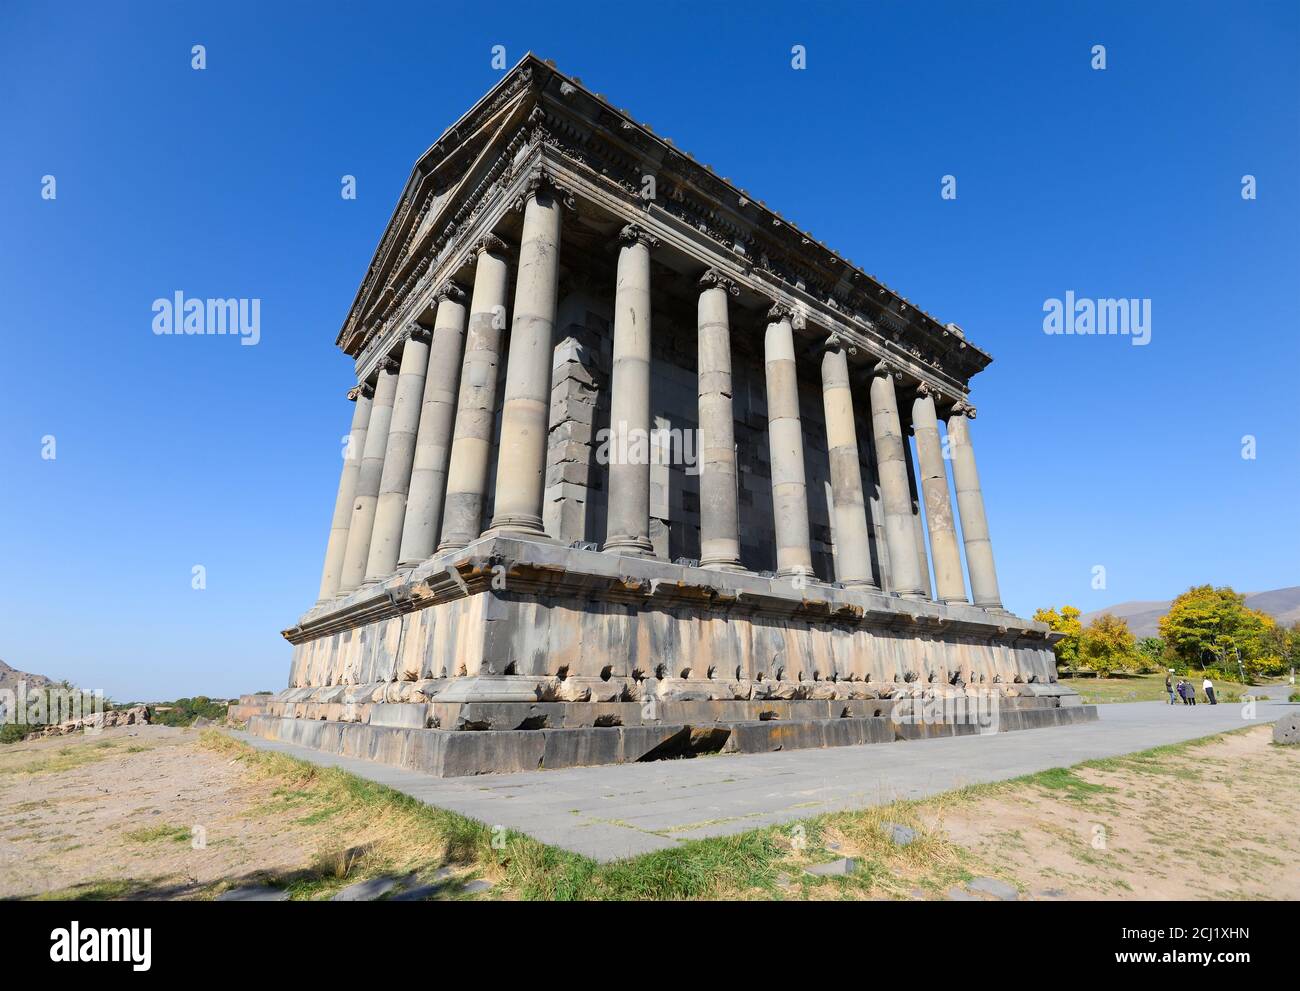 Temple of Garni in Garni, Armenia. Tourist attraction and central shrine of Hetanism, the Armenian neopaganism. Greco-Roman colonnaded building. Stock Photo